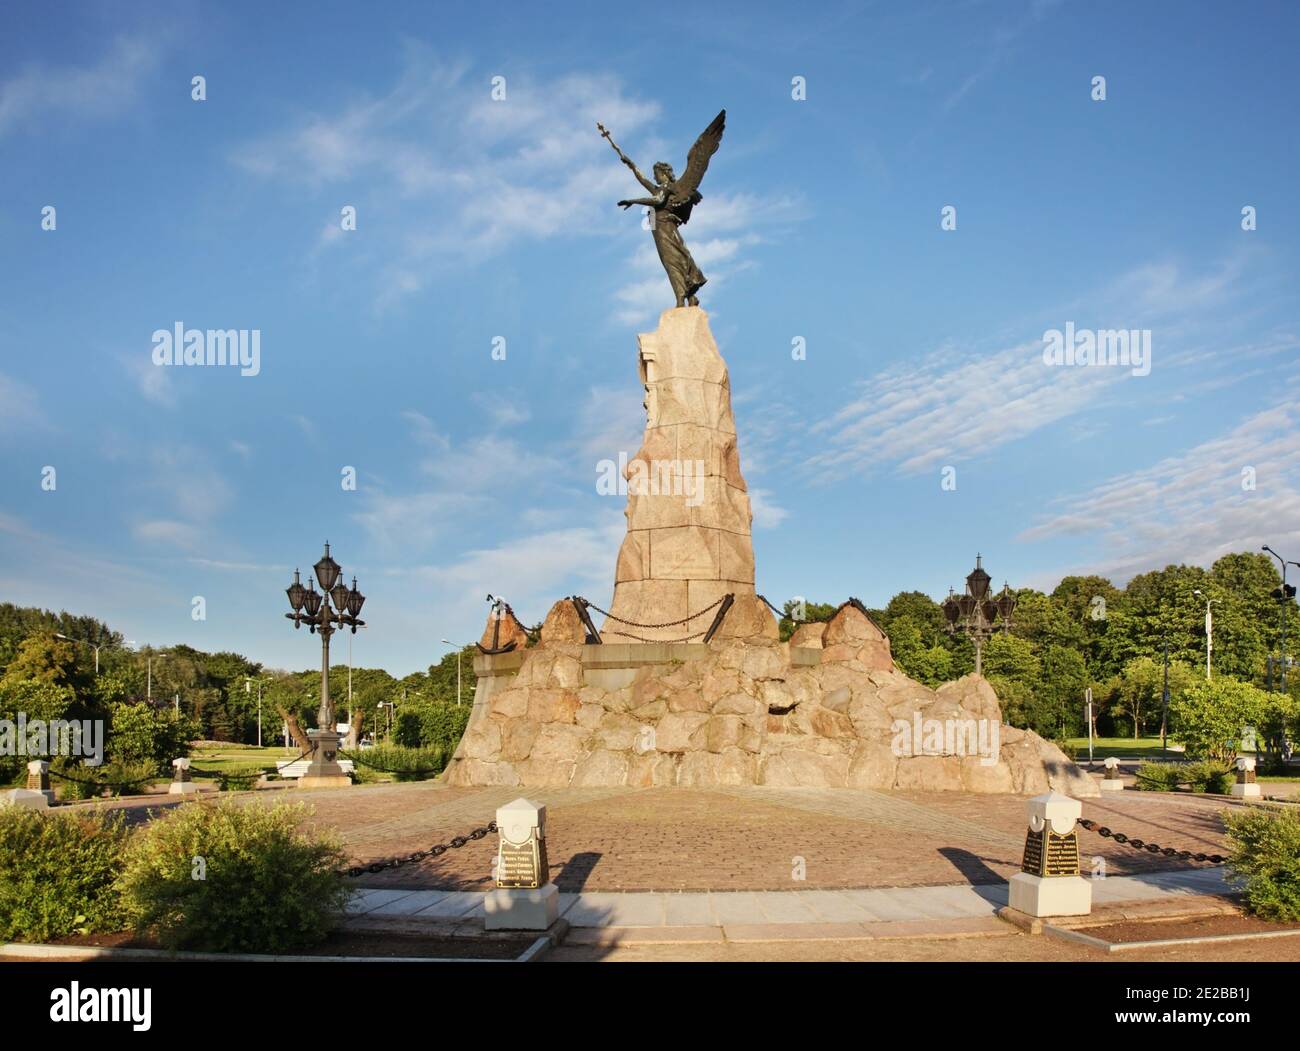 Russalka Memorial a Tallinn. Estonia Foto stock - Alamy